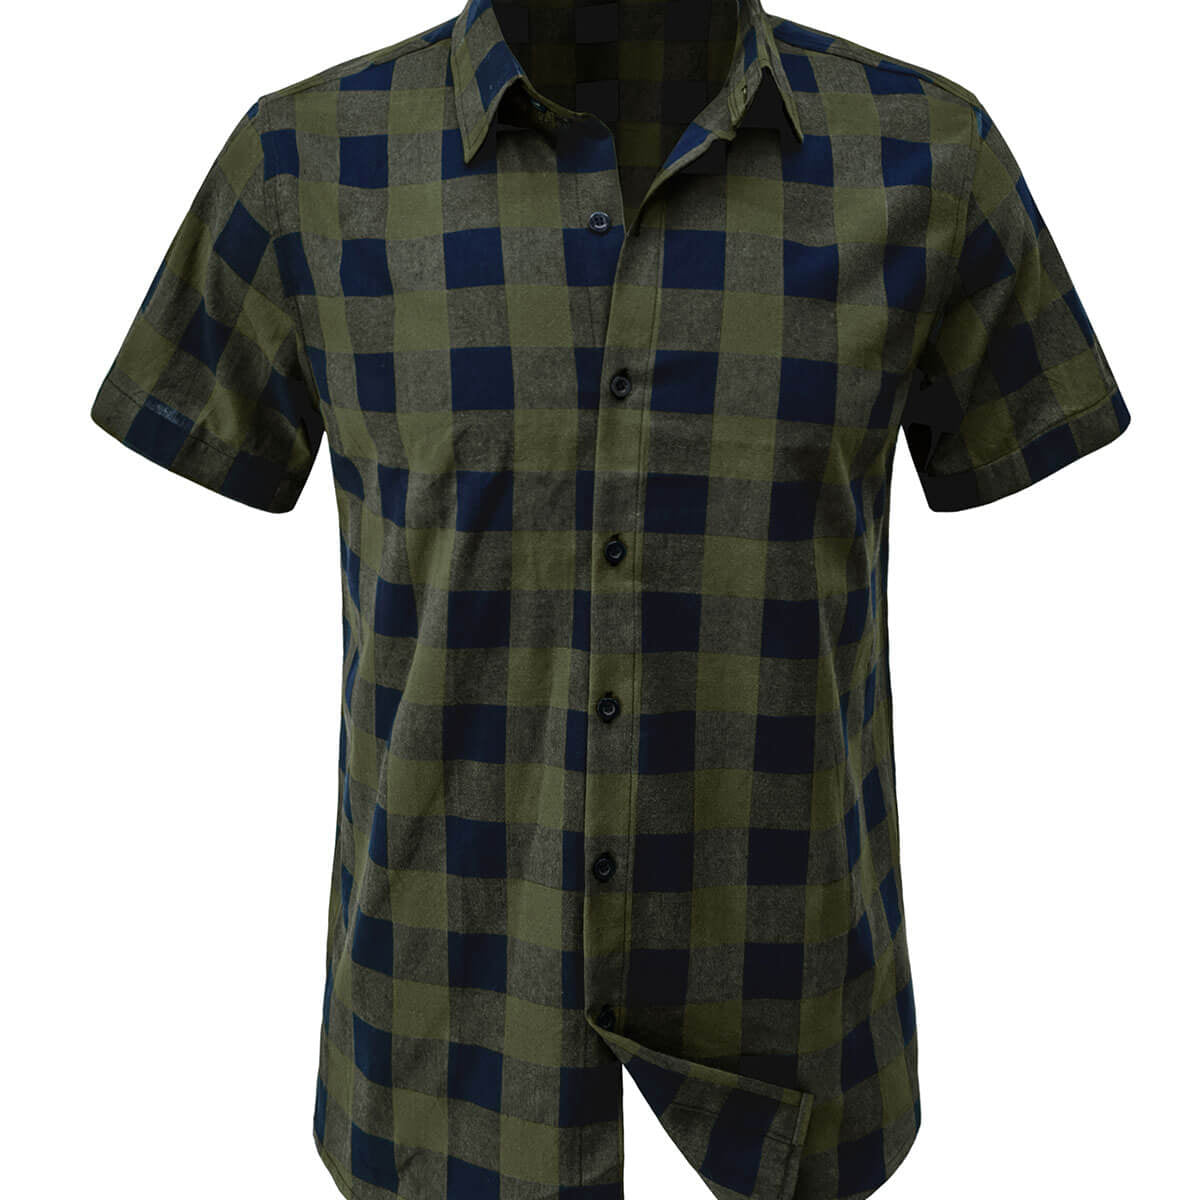 Men's Casual Plaid Cotton Button Up Check Short Sleeve Shirt